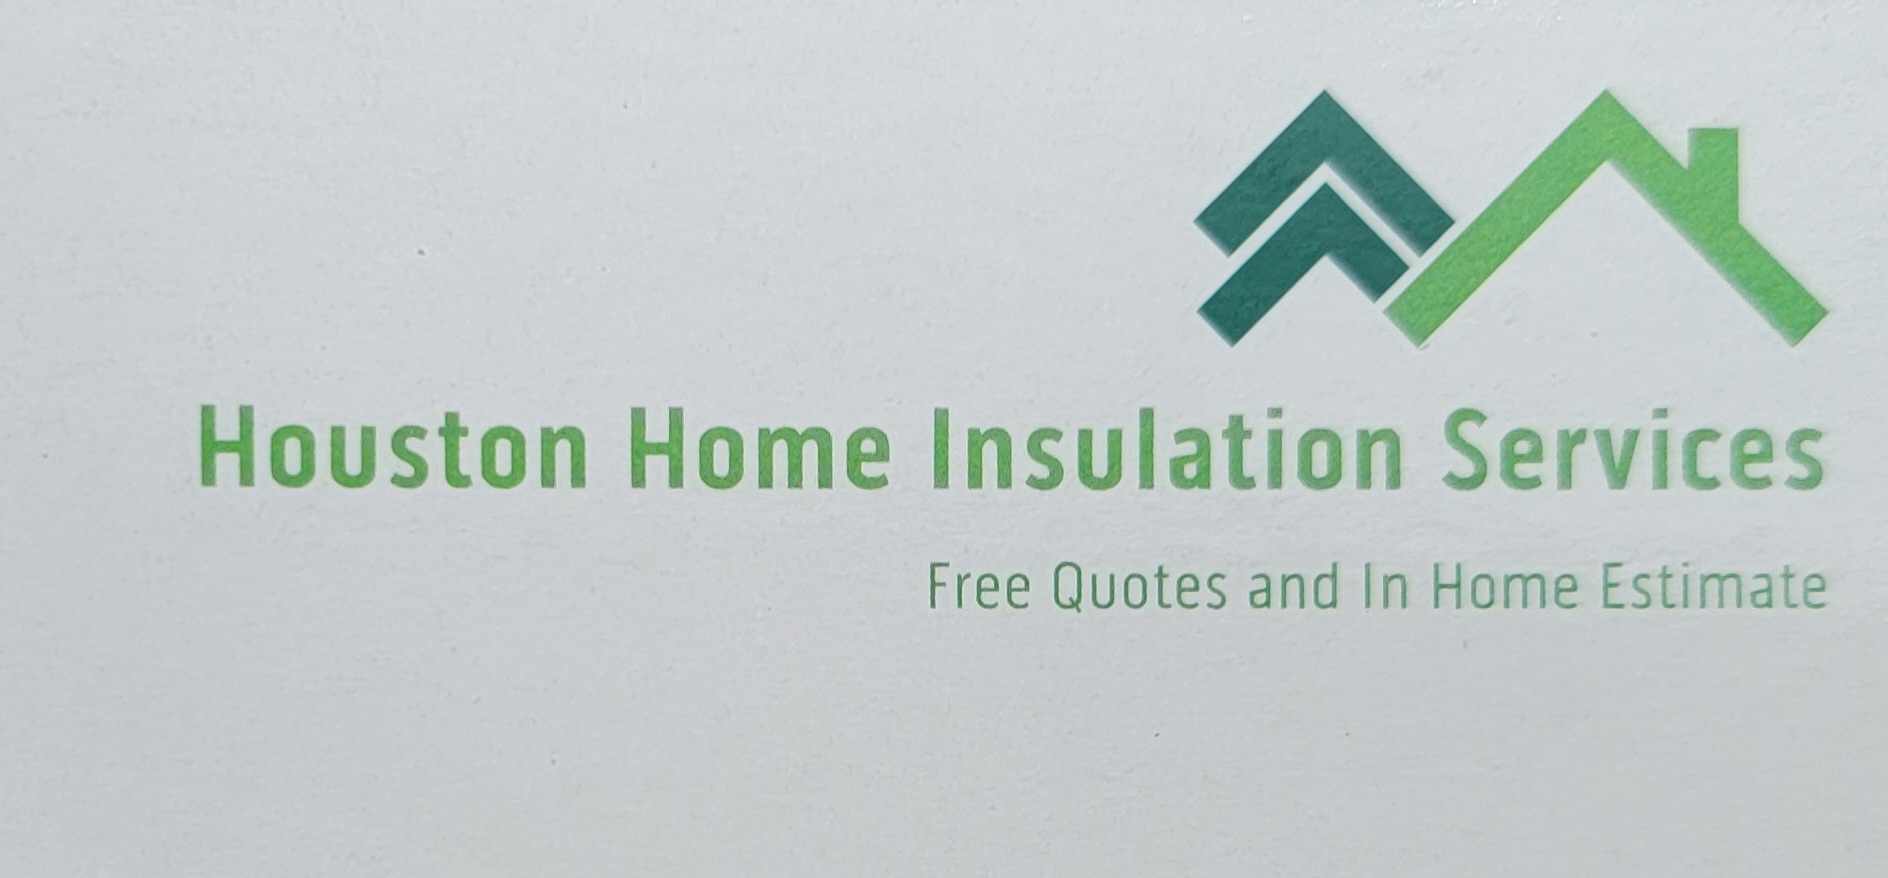 Houston Home Insulation Services Logo